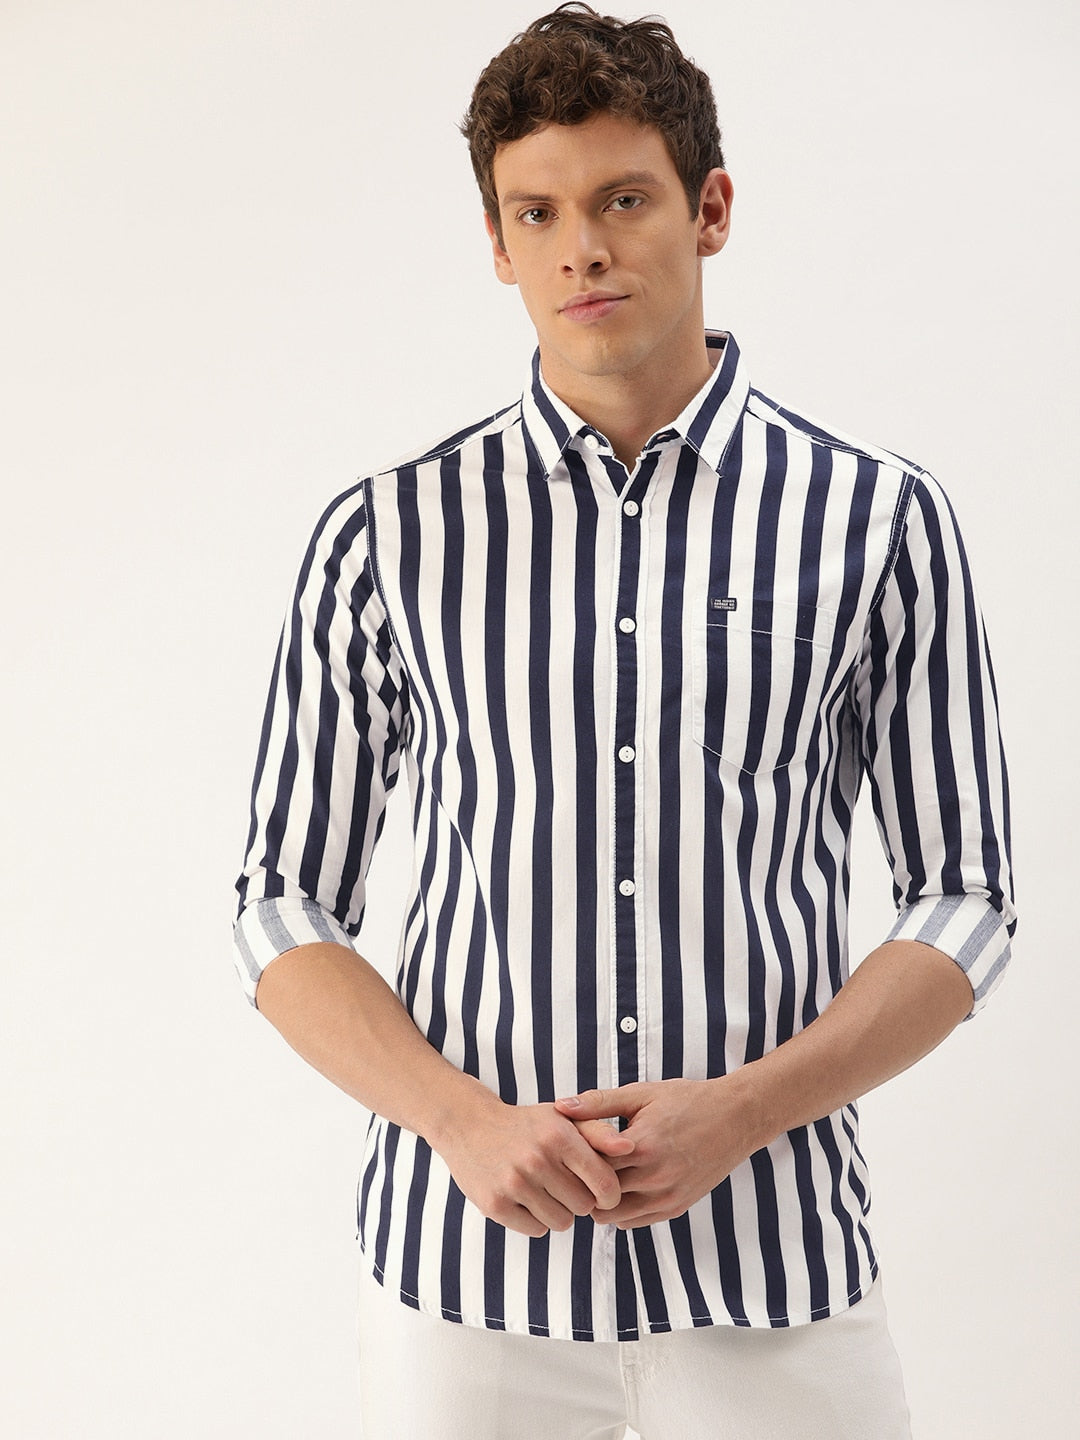 Shop Men Striped Shirt Online.